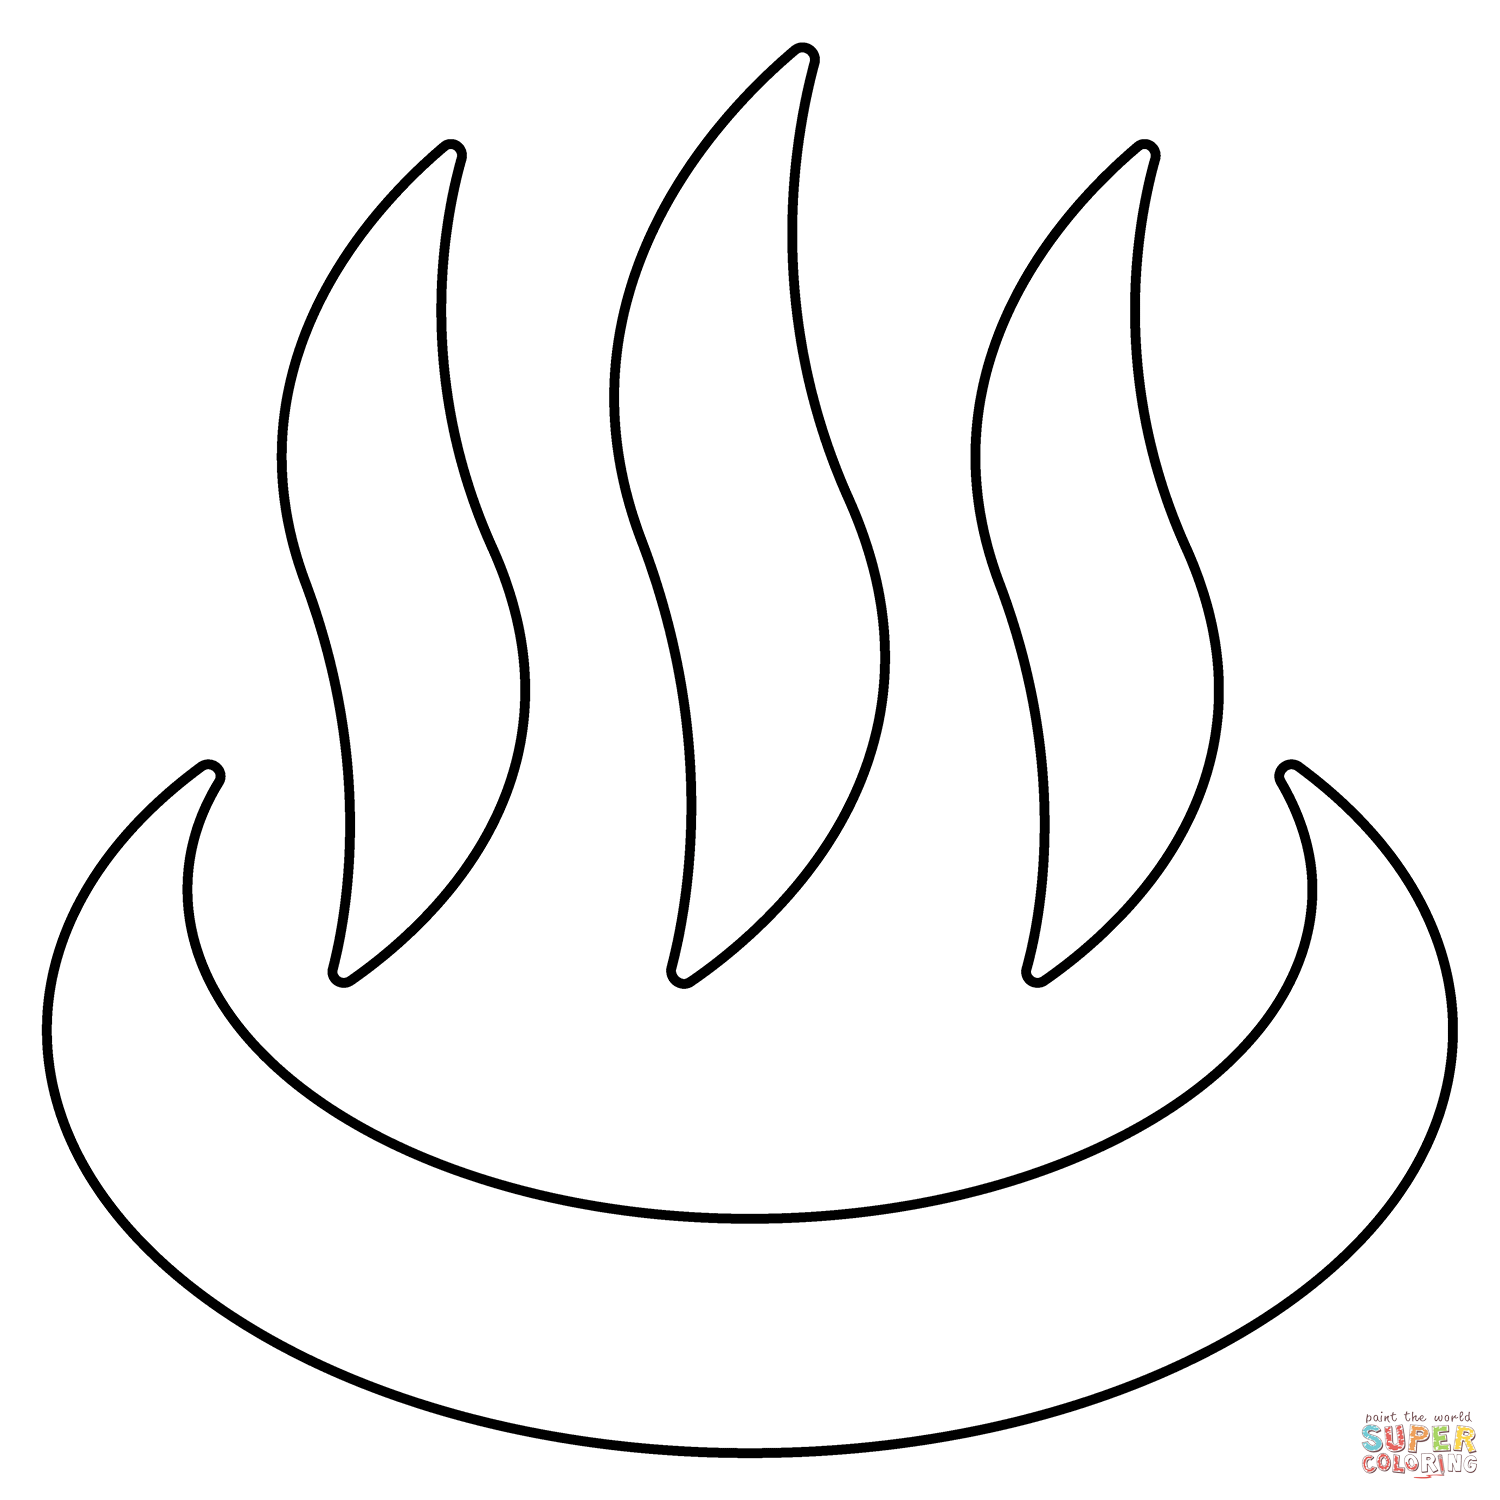 Hot springs emoji coloring page free printable coloring pages